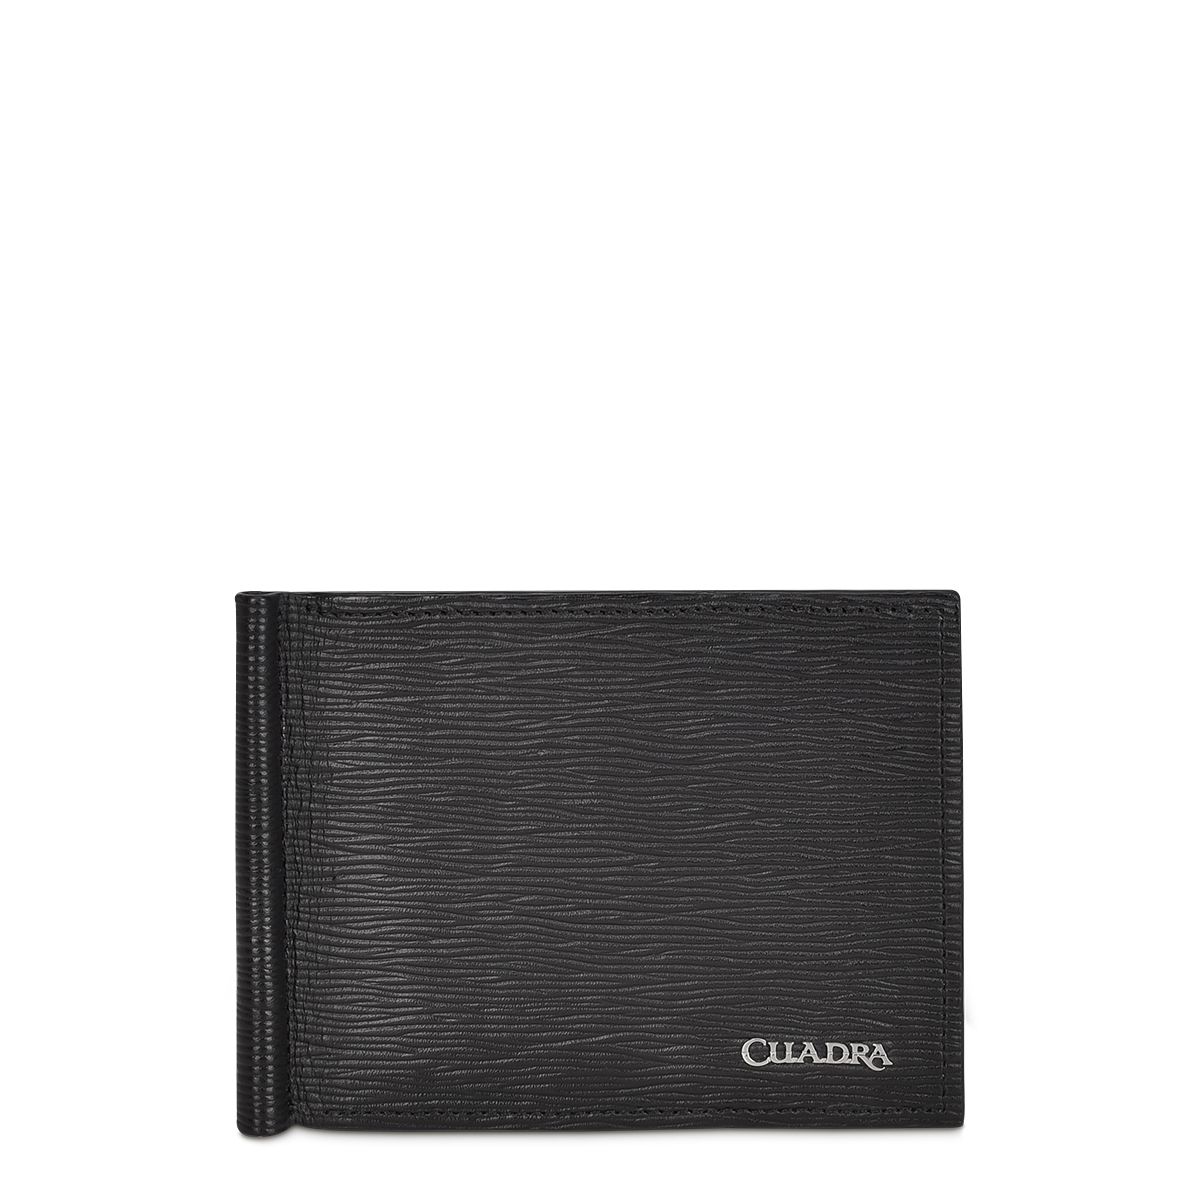 B3042RS - Cuadra black classic leather bi fold wallet for men-Kuet.us